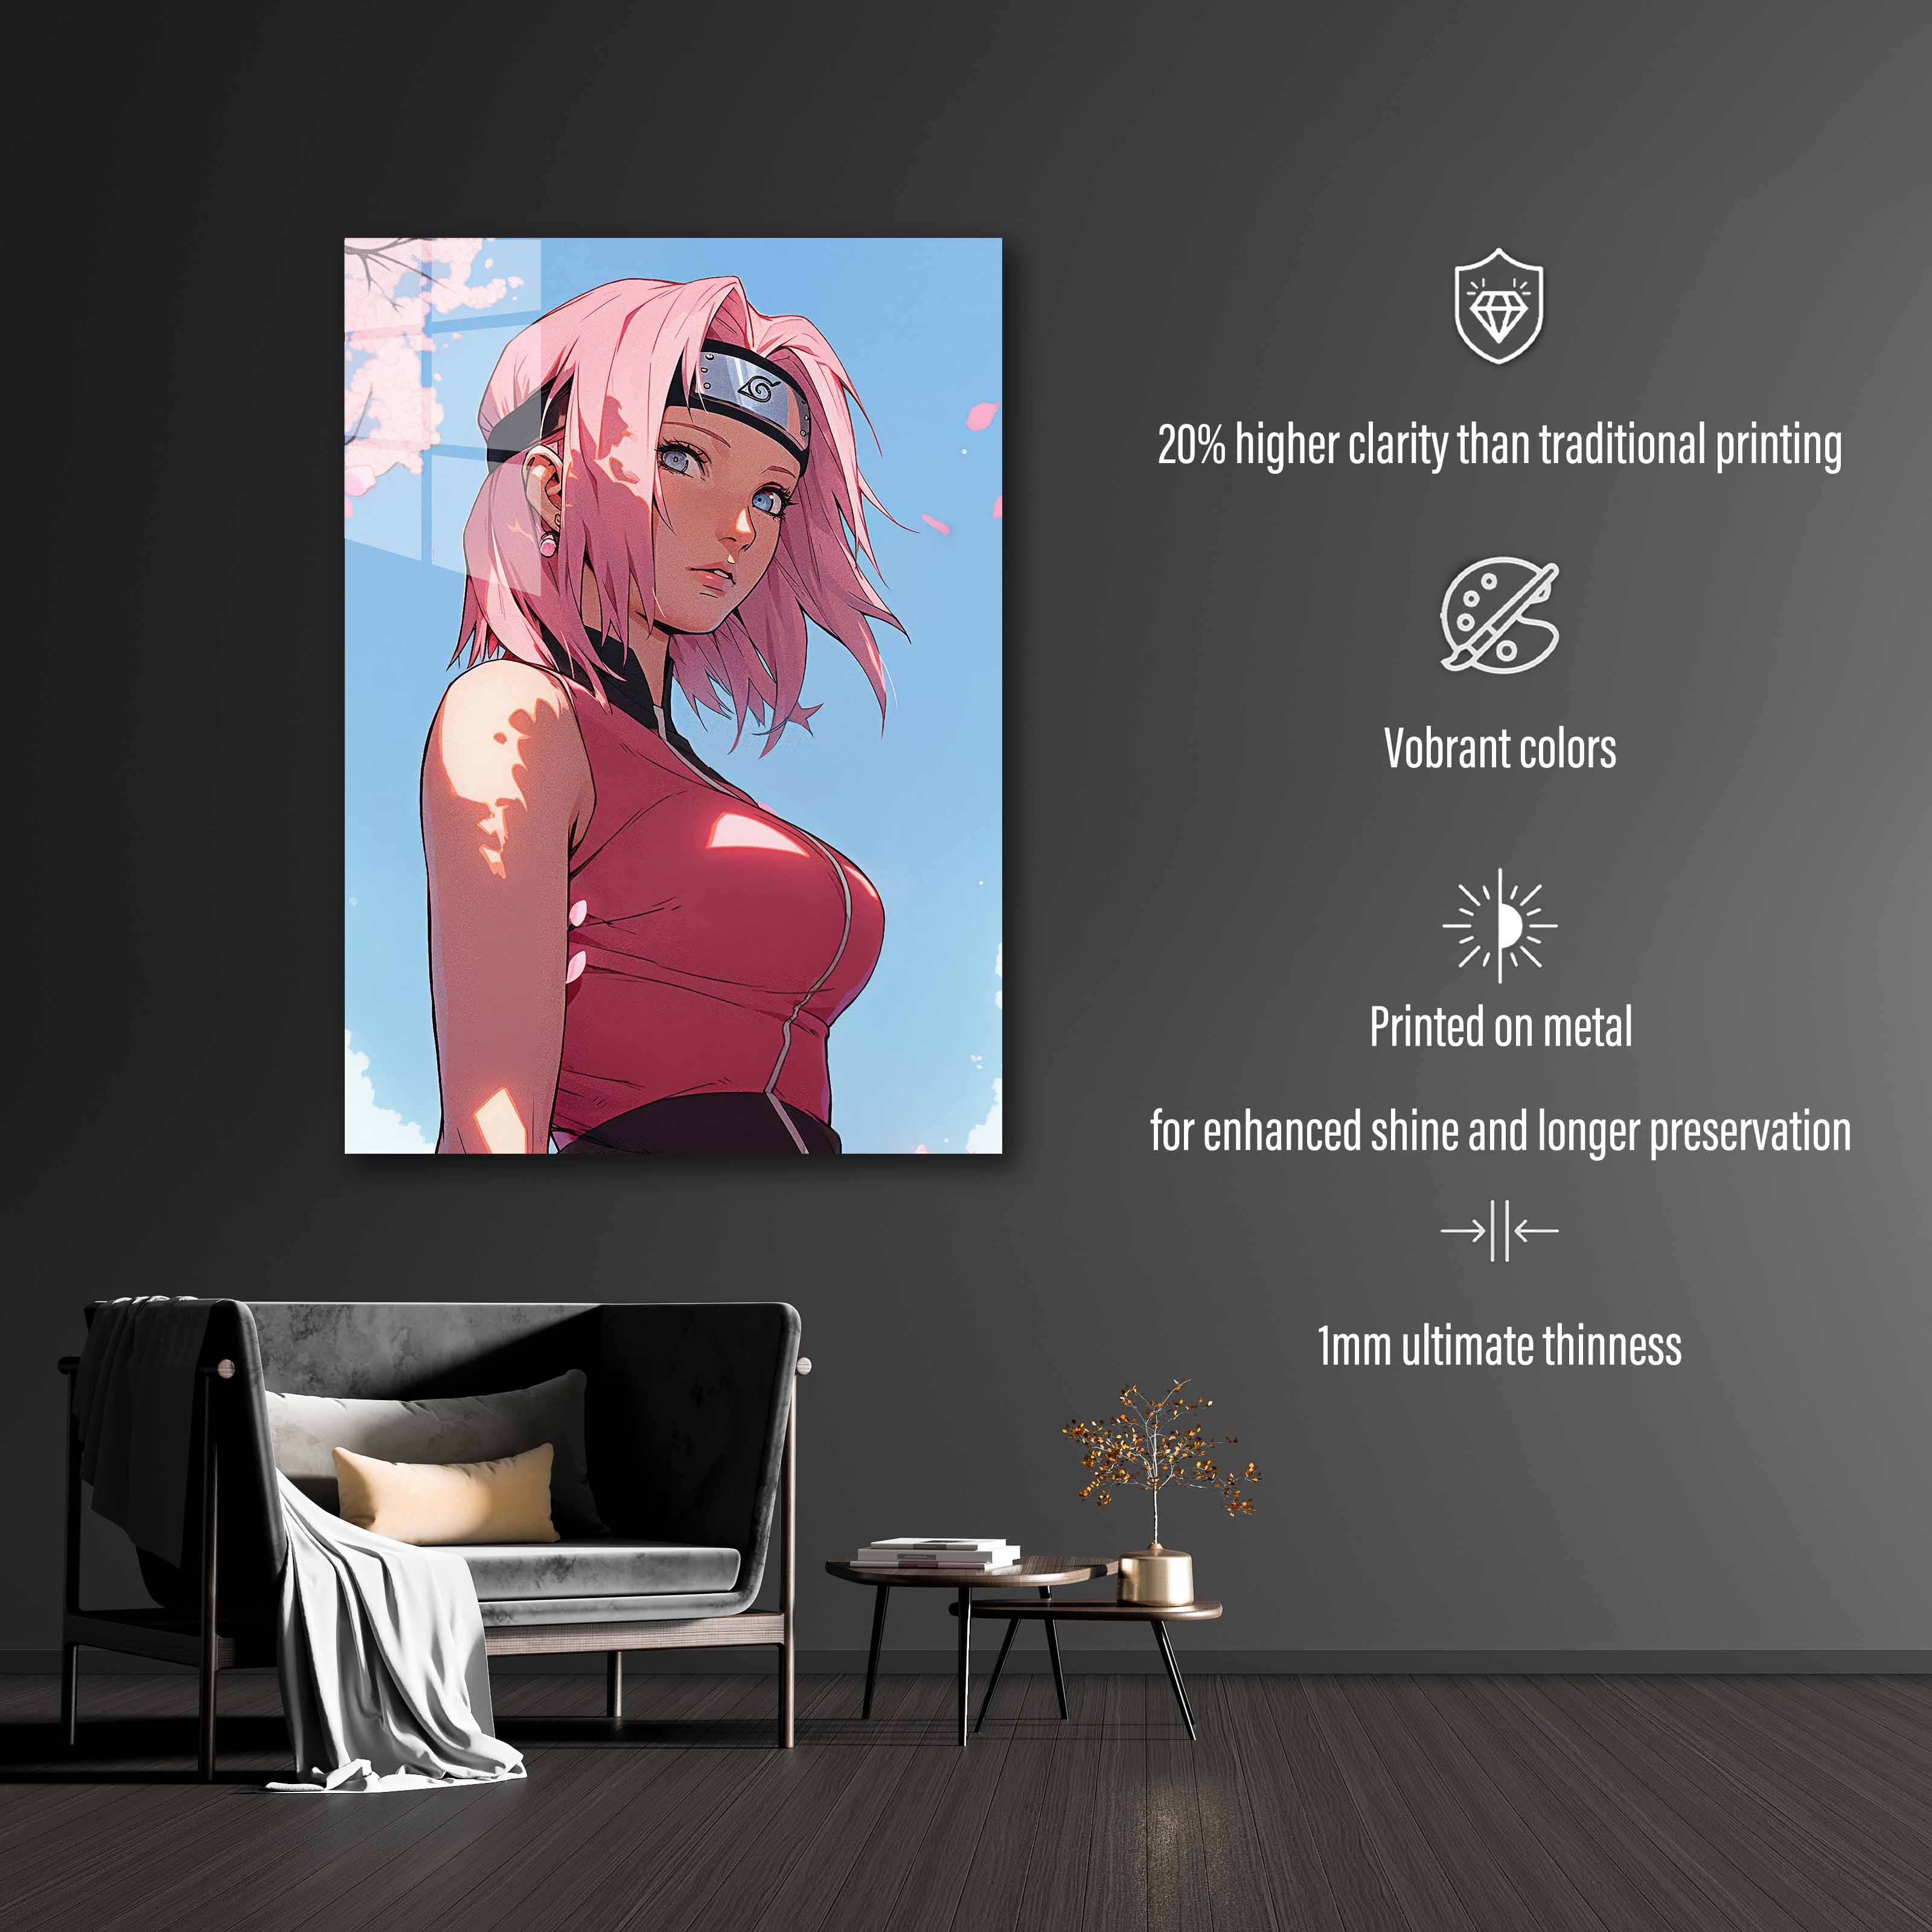 Sakura's Resolve-designed by @ alterinkdesigns